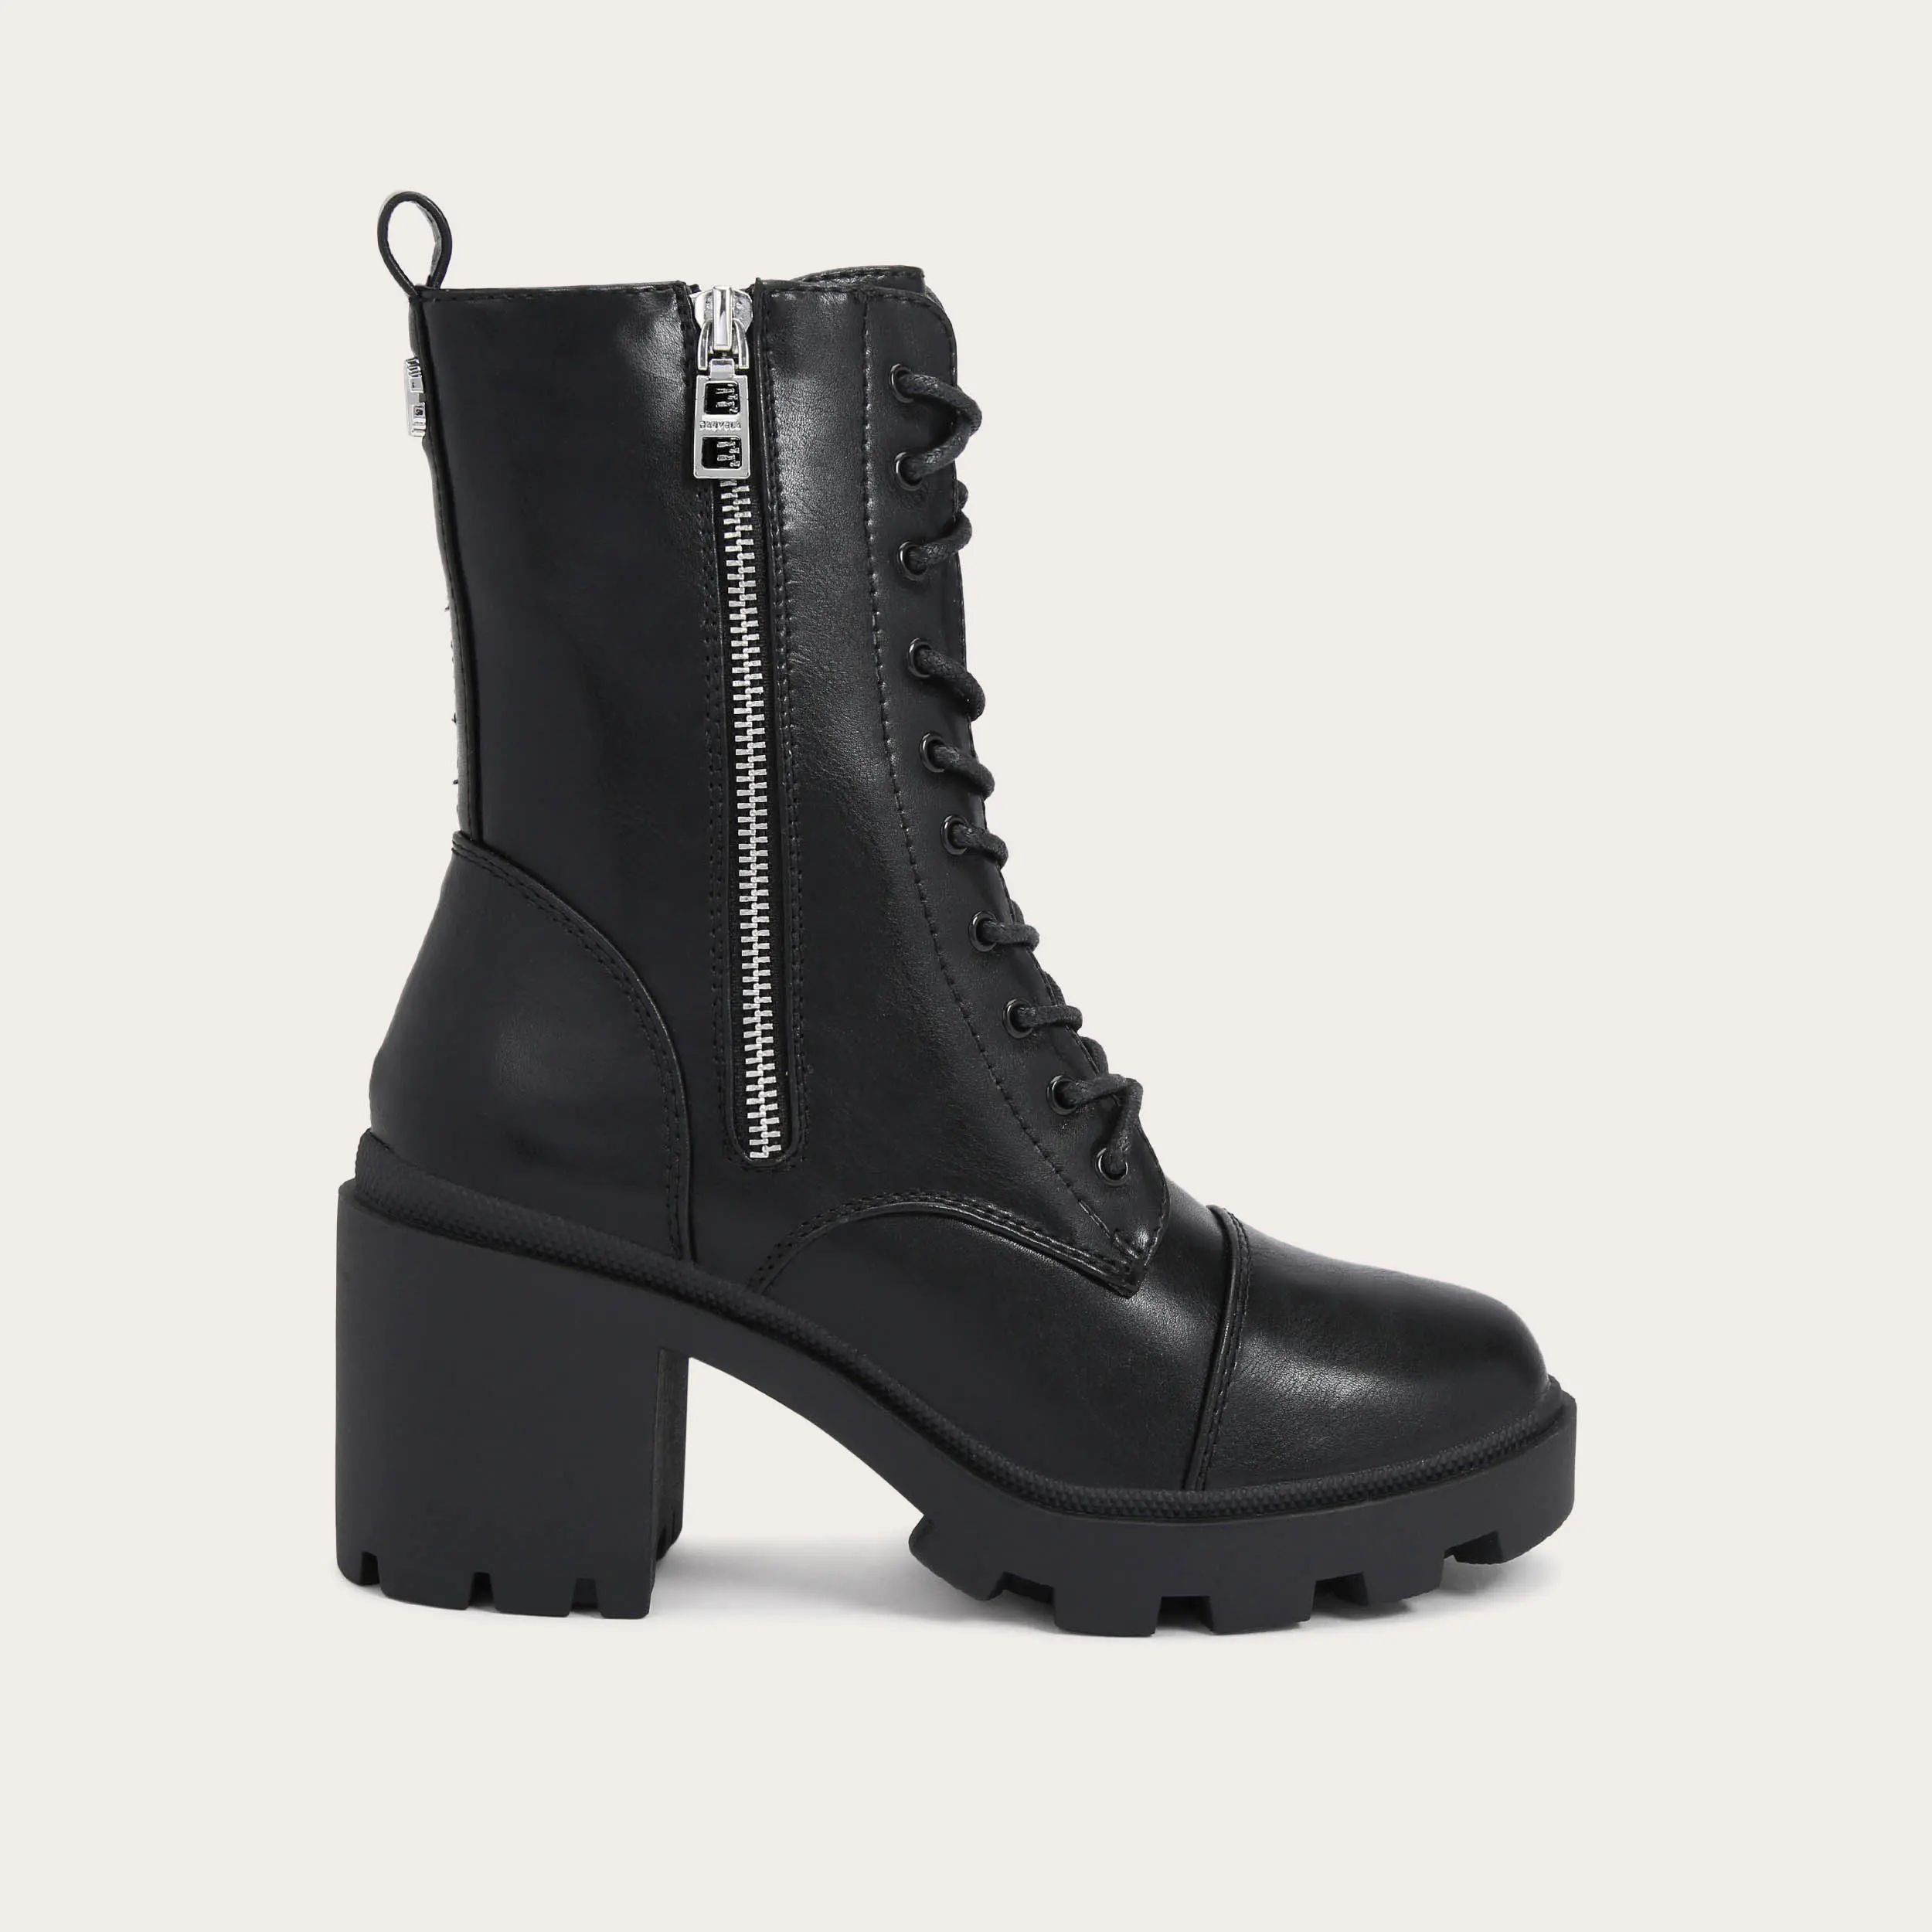 SIREN Black Lace Up Heel Ankle Boot by CARVELA | Carvela